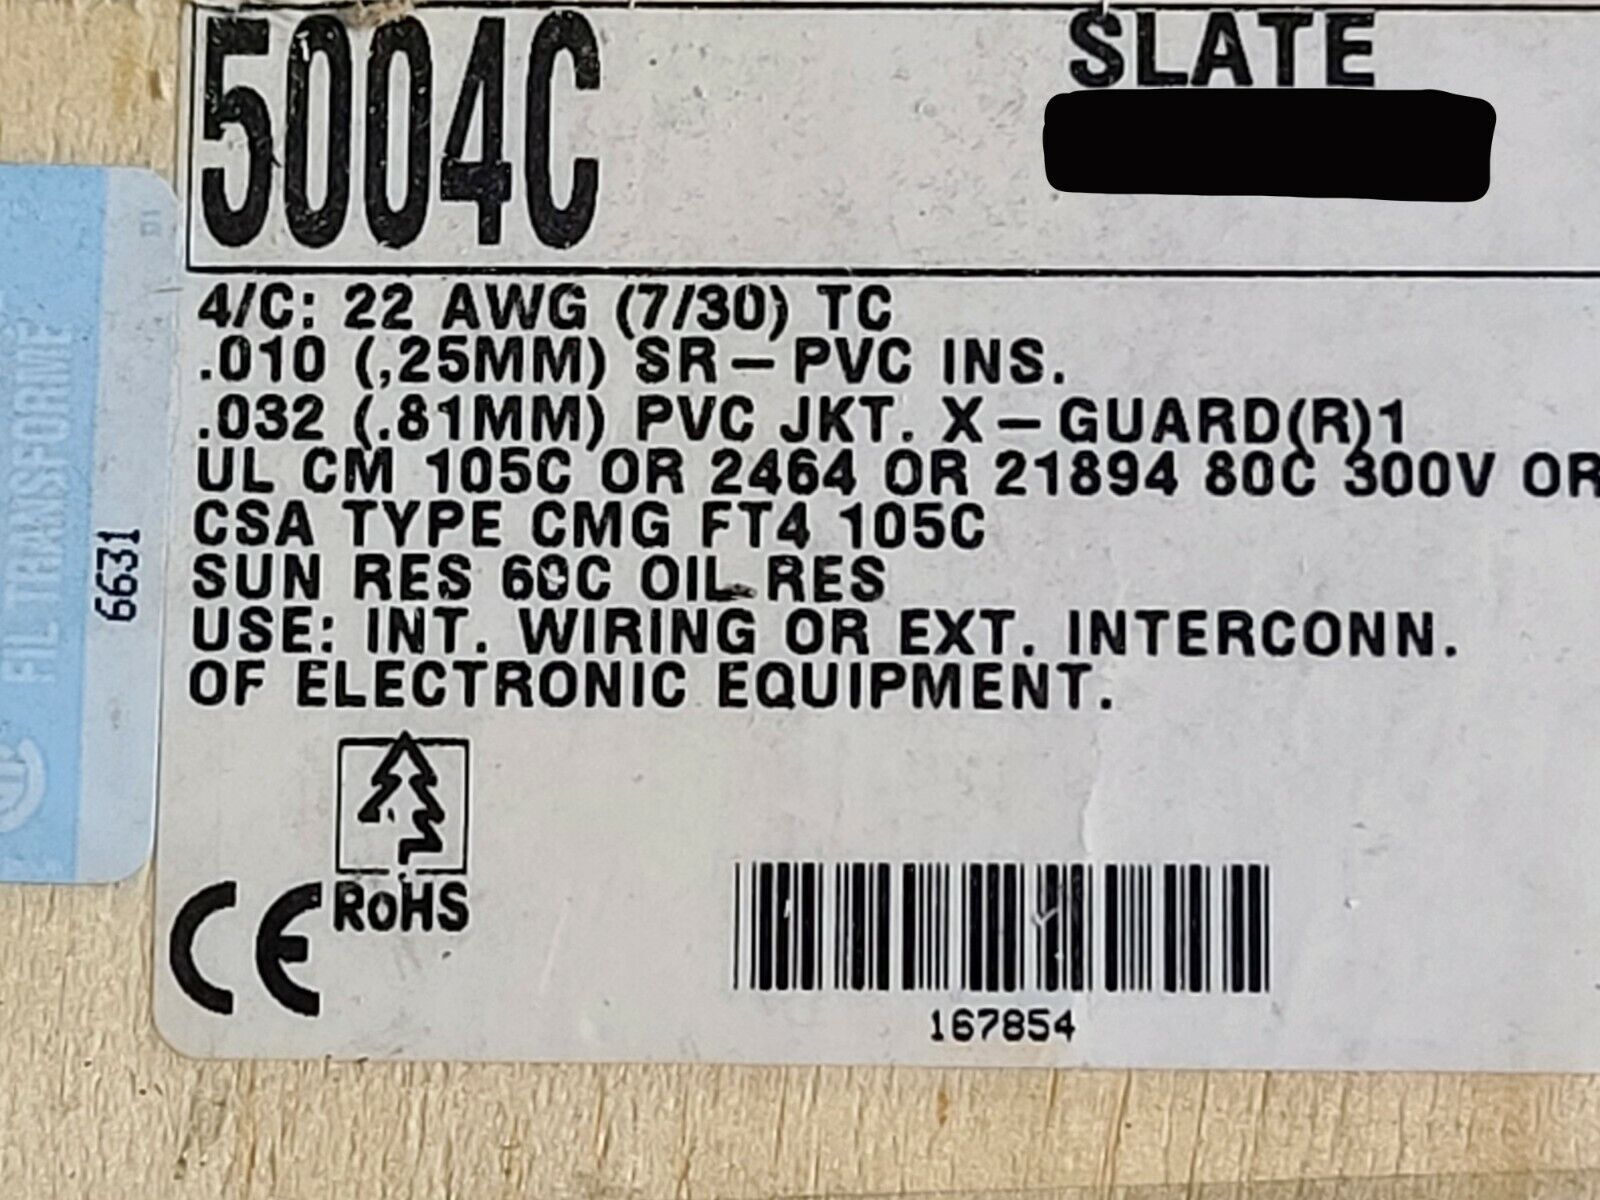 Alpha Wire 5004C 22/4C XtraGuard High Performance Instrumentation/Control Cable